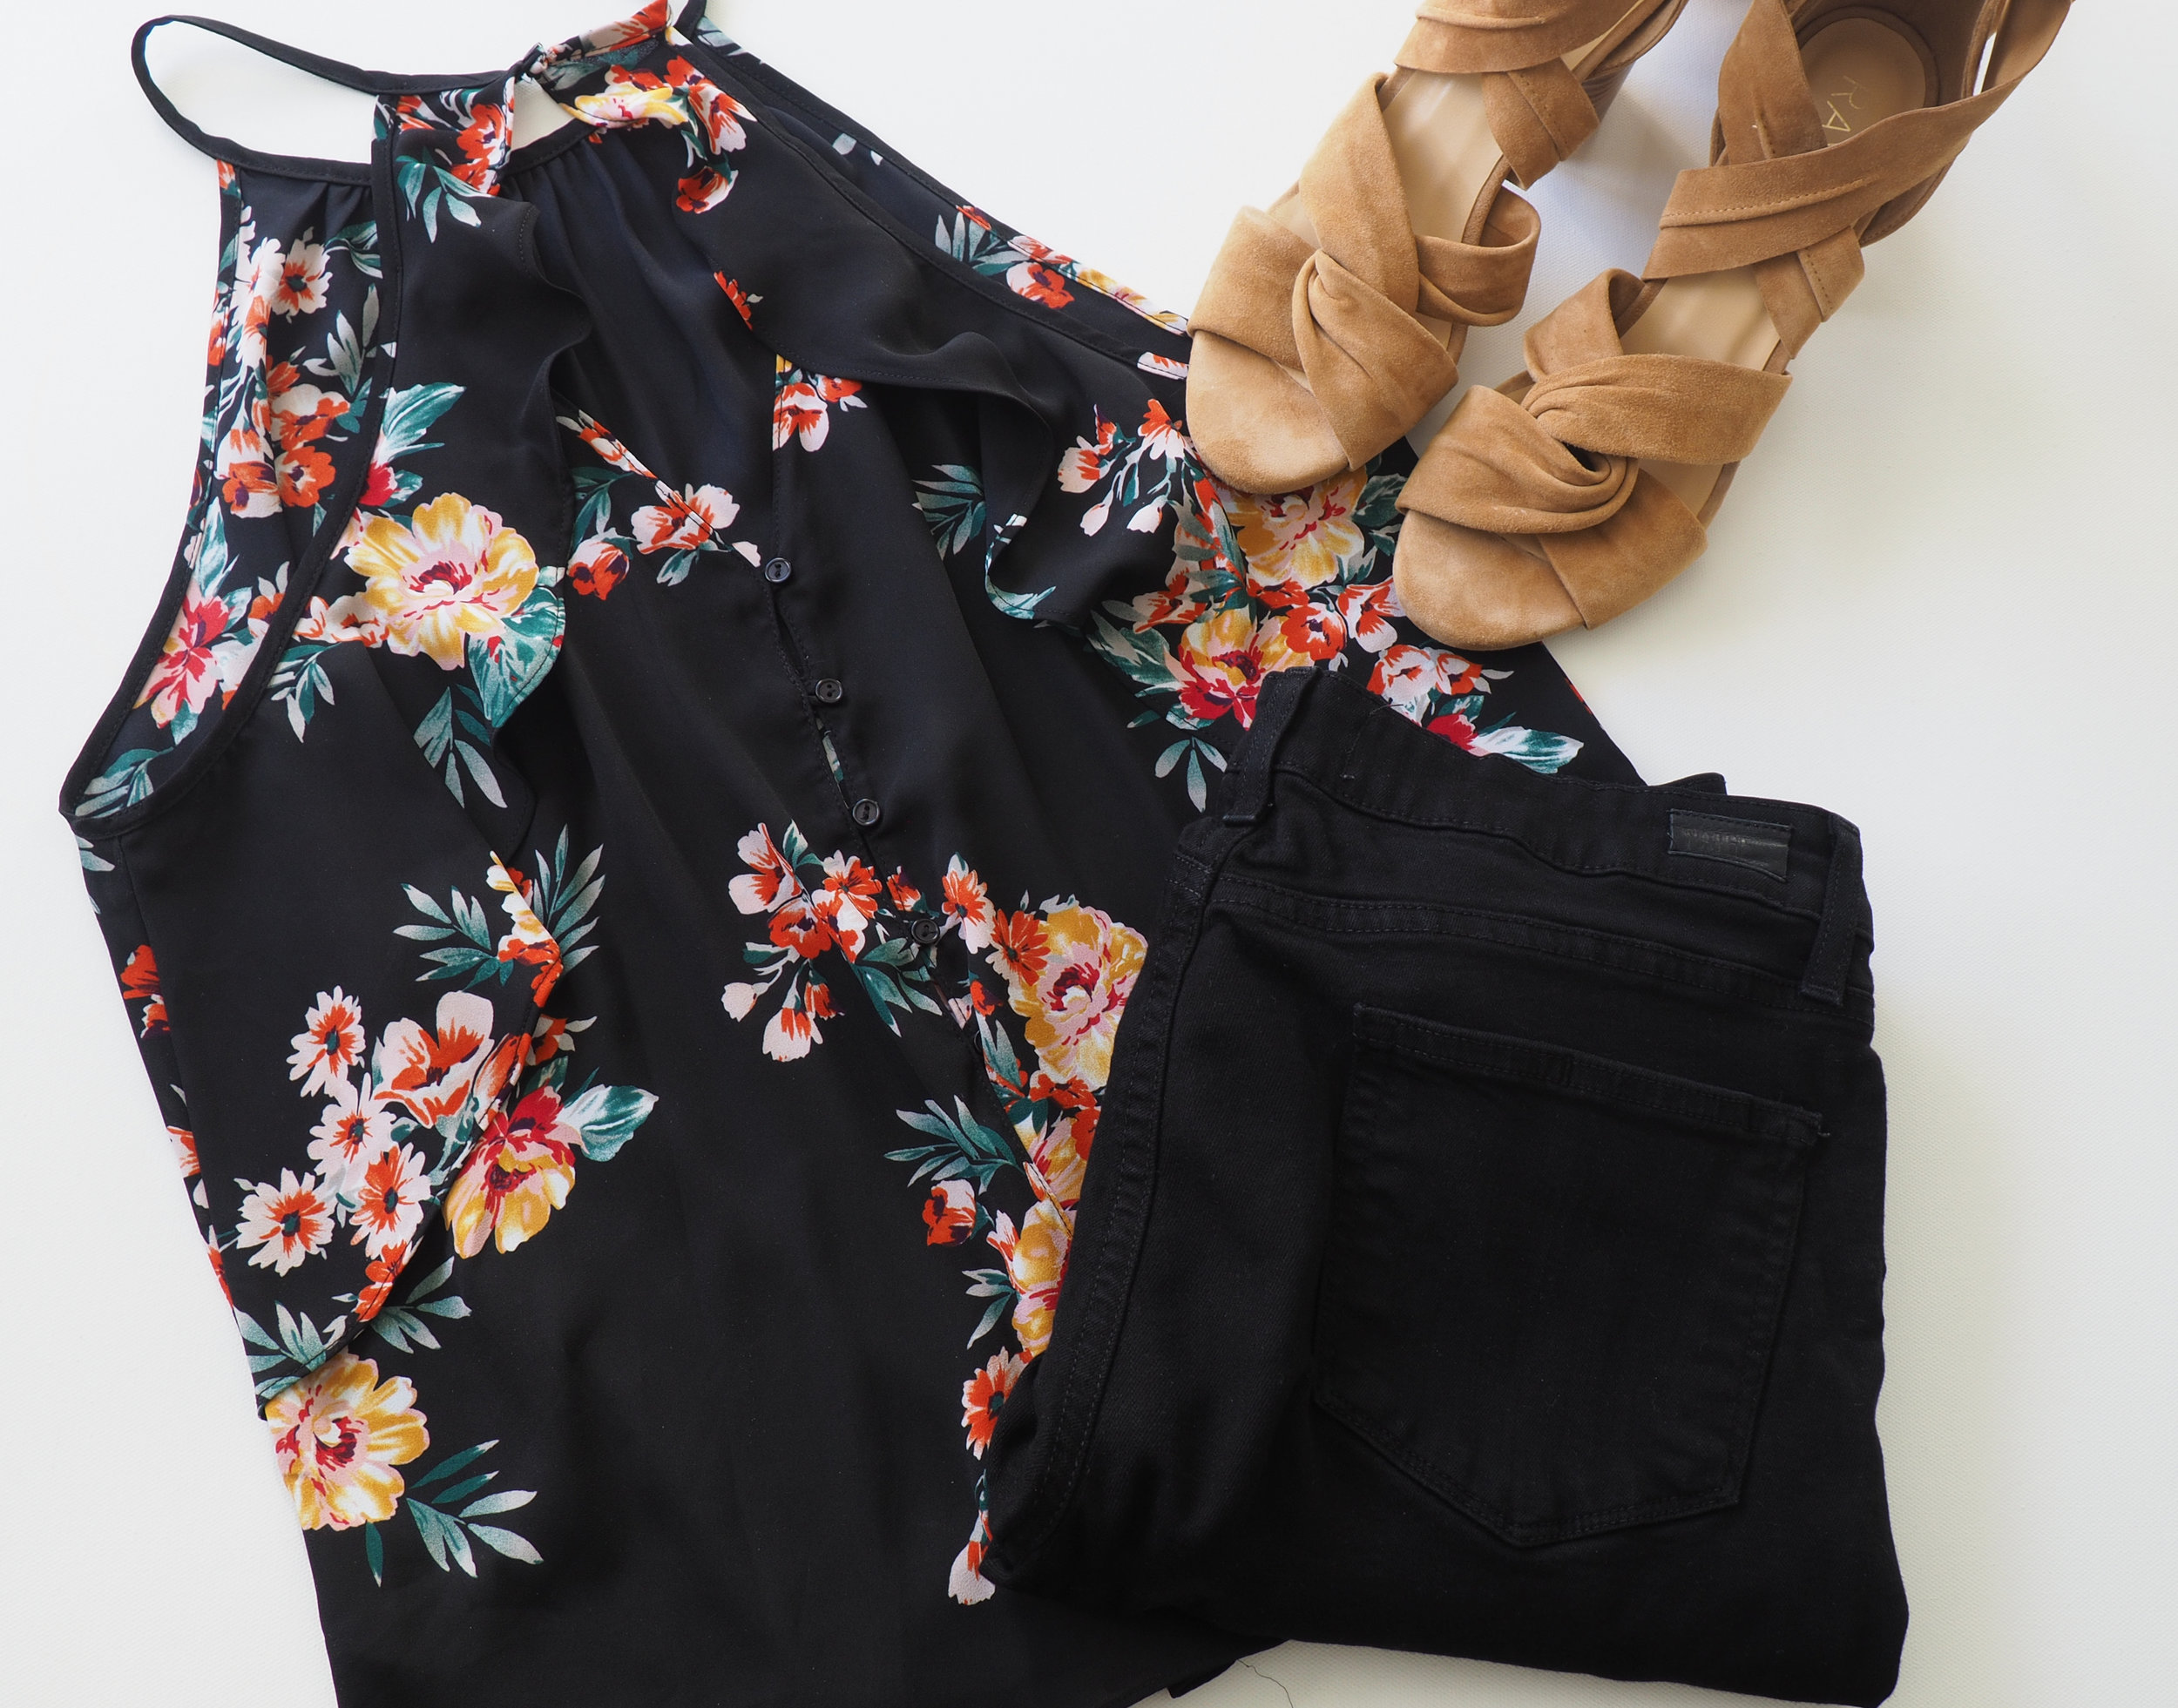  Floral Cami  (Similar)  |  Black Jeans  | Sandals  (Same style, different color)  